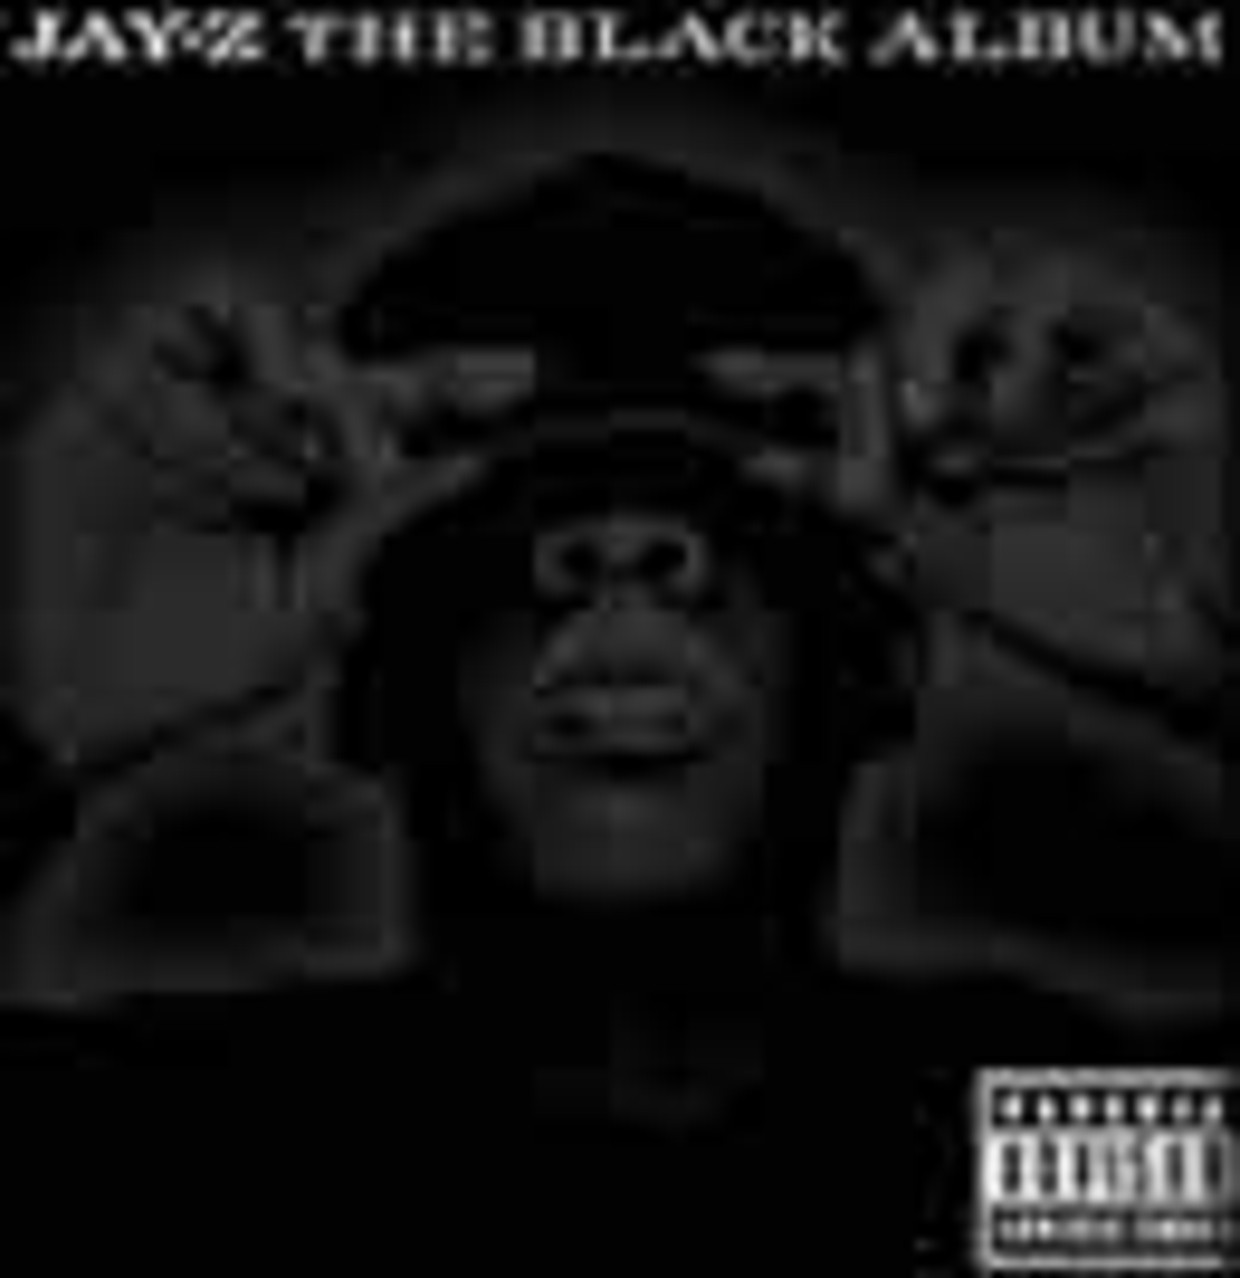 Review JayZ The Black Album Humo